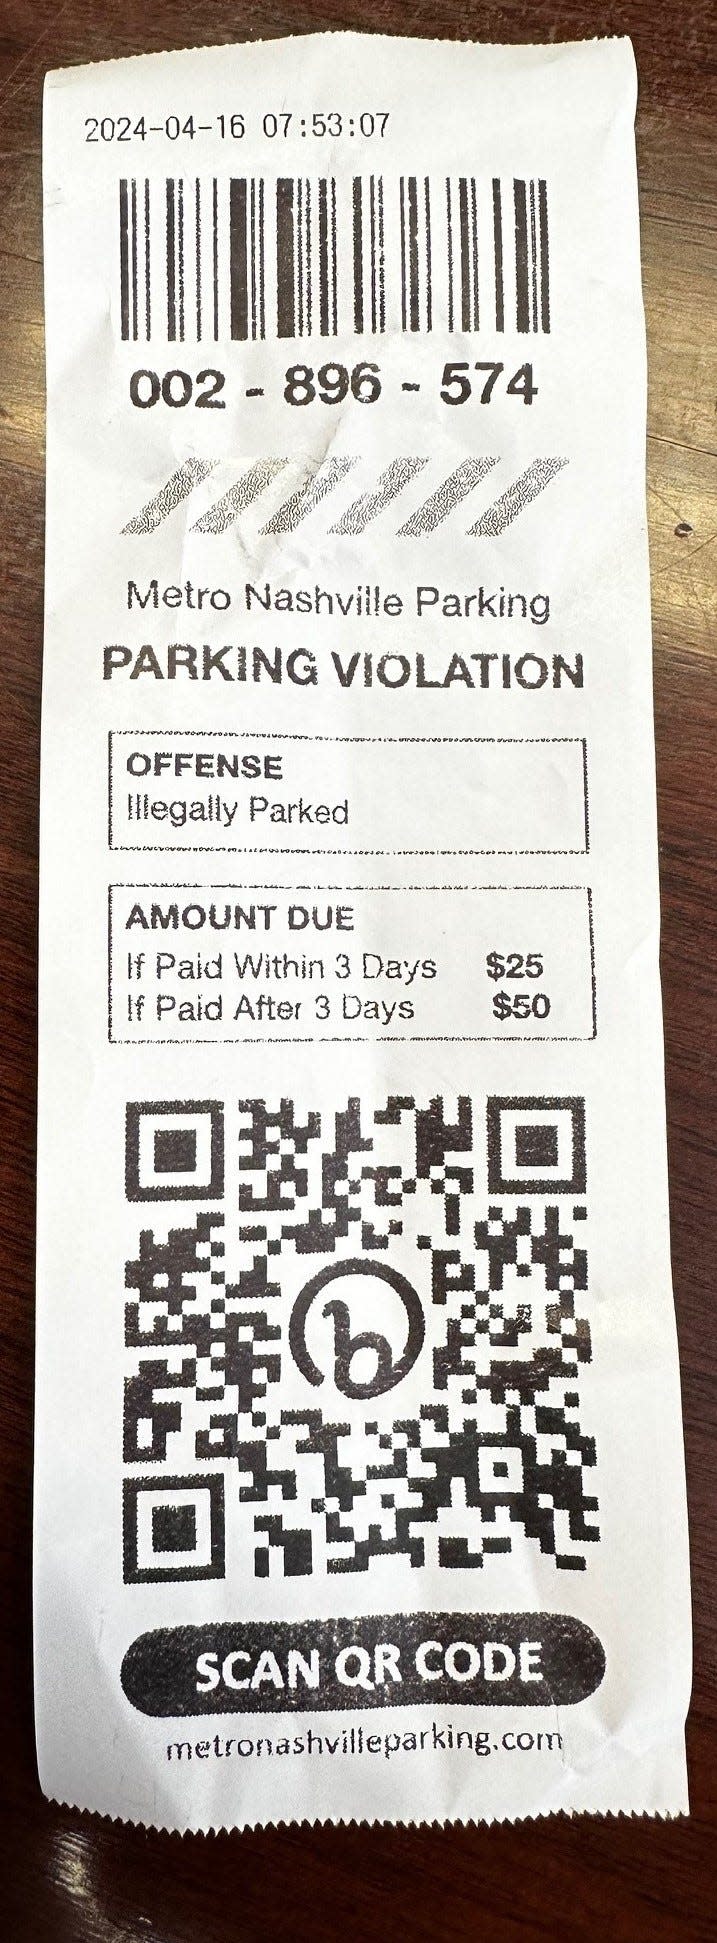 Metro Nashville police warn of scam parking tickets in Midtown Hills.